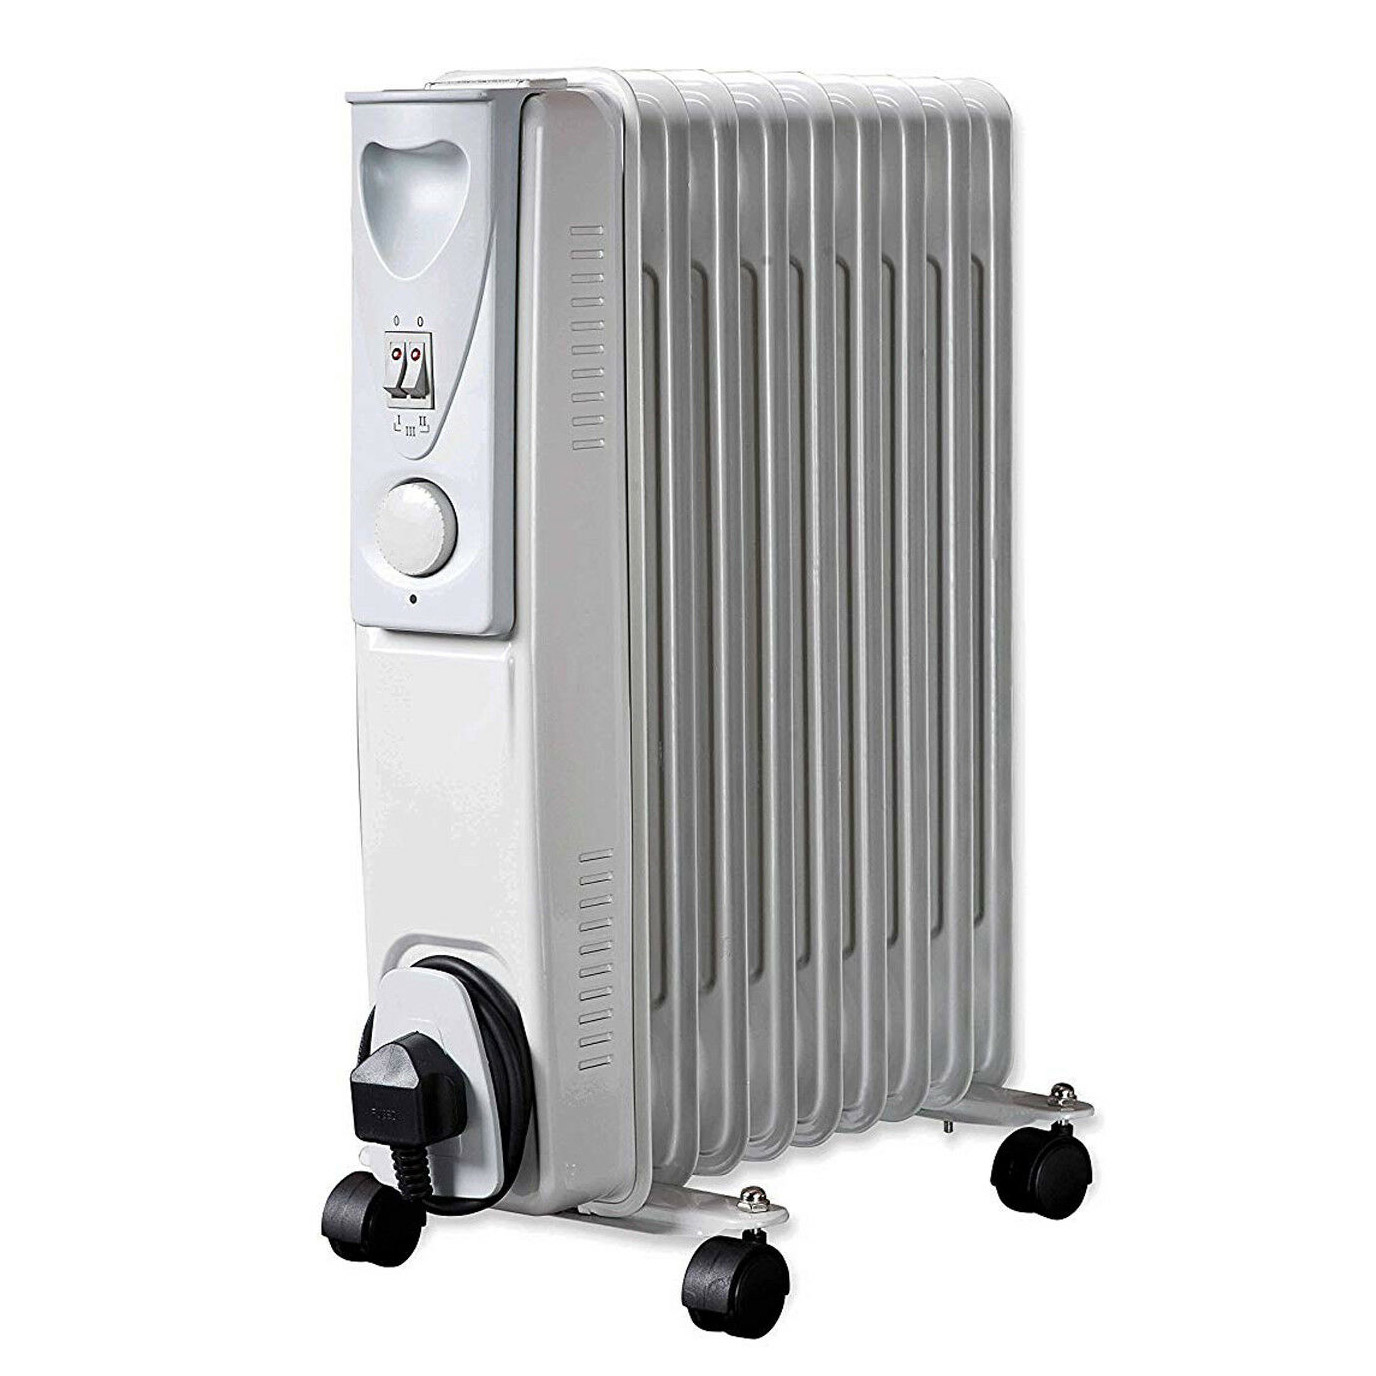 Image of Daewoo HEA1141GE 2 0kW Oil Filled Radiator in White 3 Heat Settings